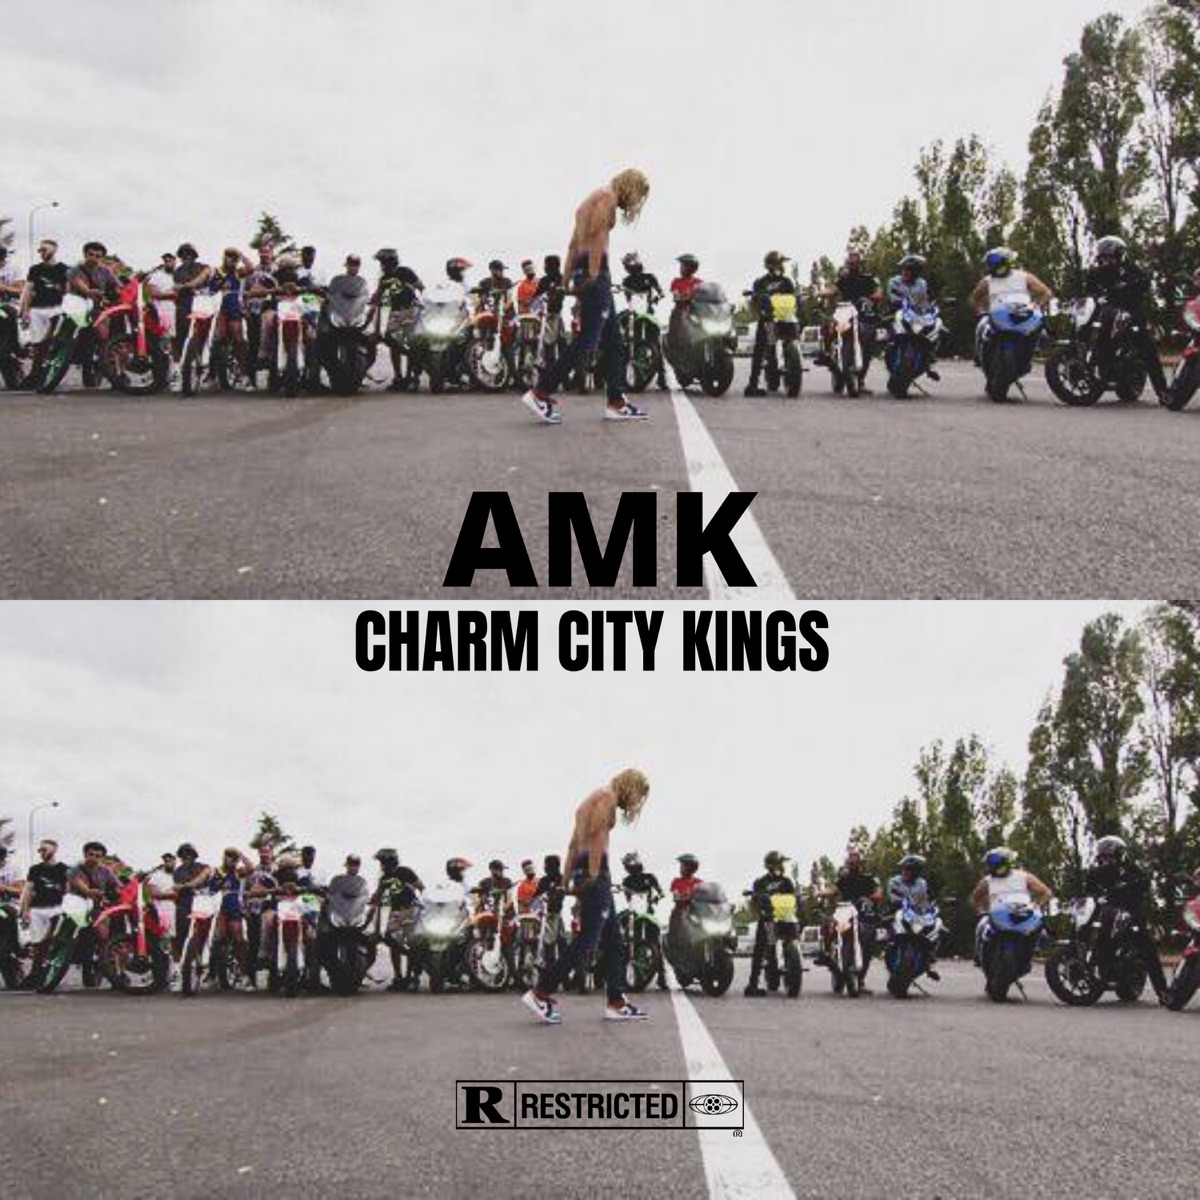 Charm City Kings - Single - Album by AMK - Apple Music